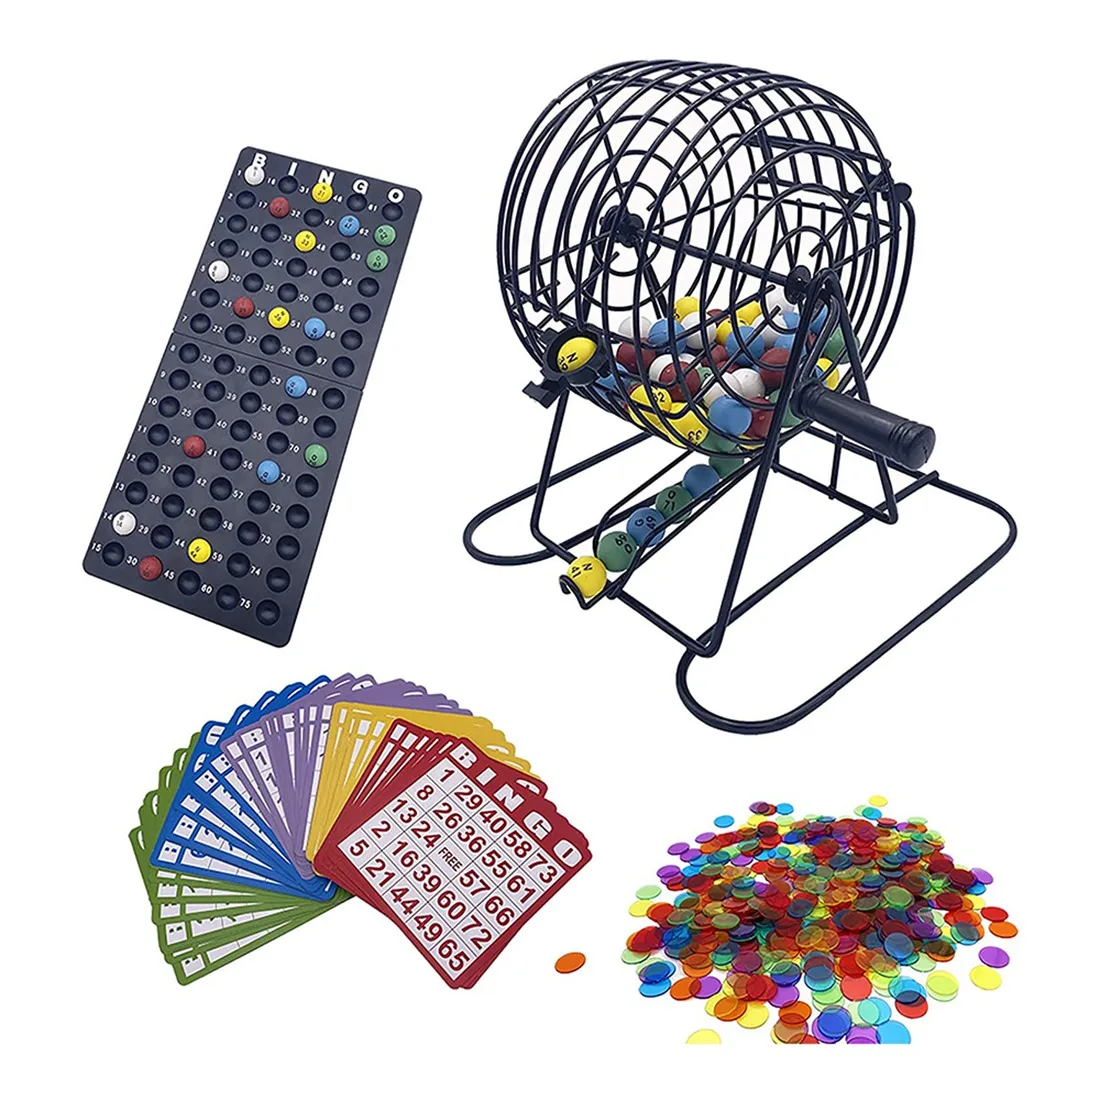 

Deluxe Bingo Game Set with 6 Inch Bingo Cage, Bingo Master Board,75 Colored Balls , 50 Bingo Cards, and 300 Bingo Chips